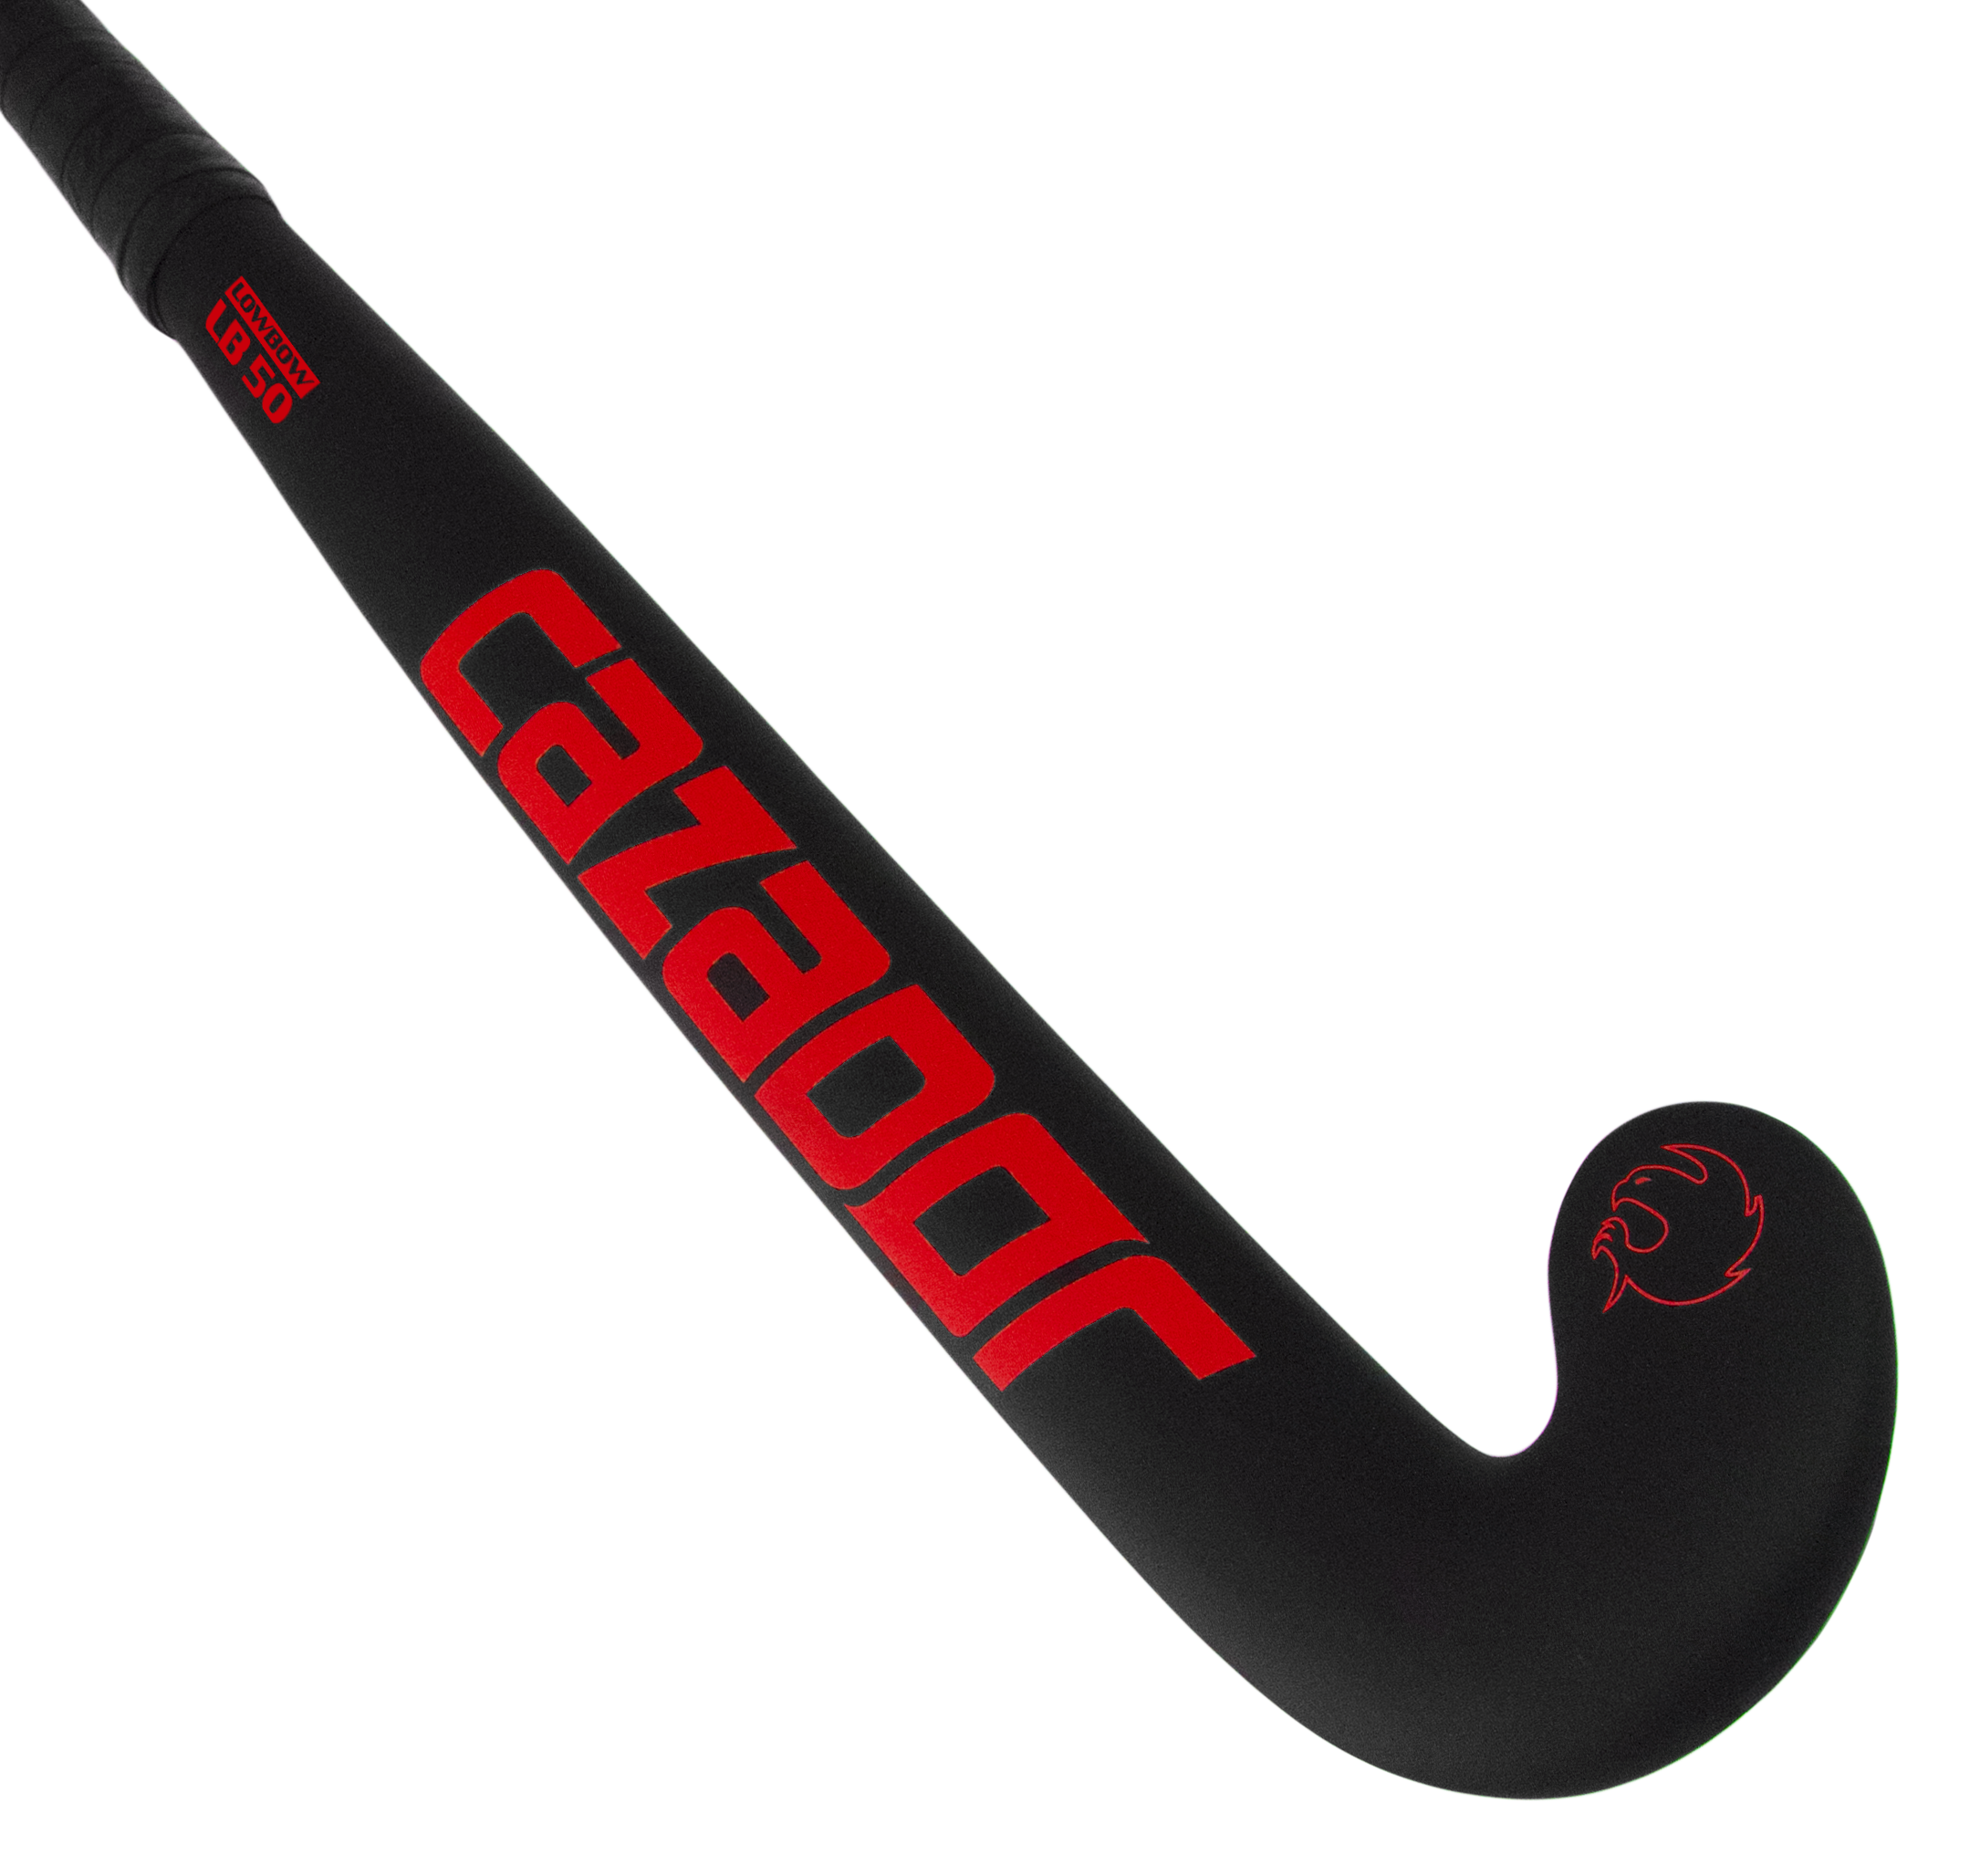 Klagen klasse Stadium Cazador Lowbow 50% carbon hockeystick - De Hockeyzaak